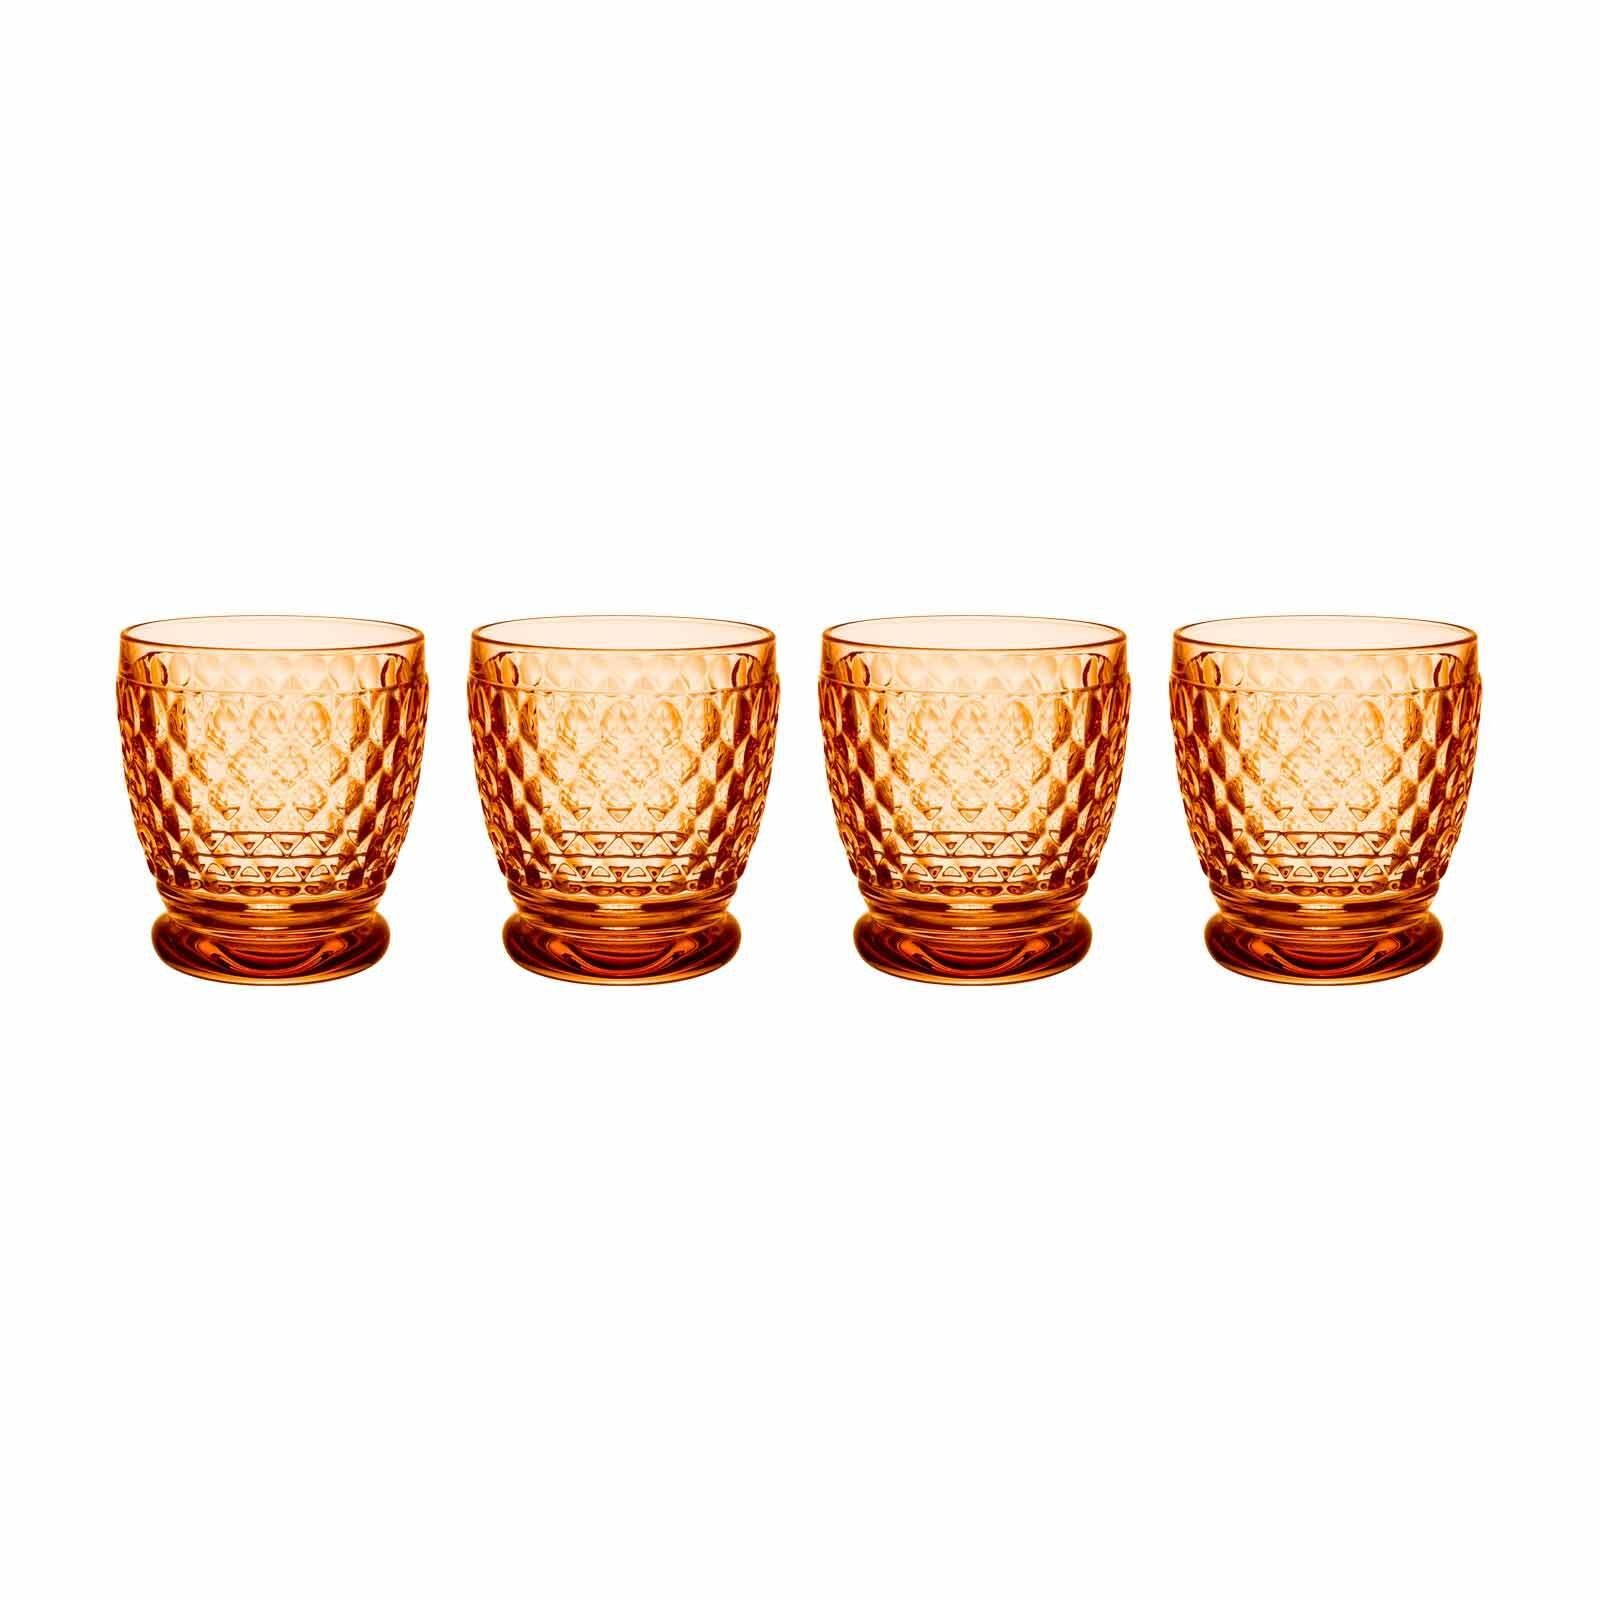 Boch Becher & 330 Boston 4er Glas Villeroy ml Set, Apricot Whiskyglas Coloured